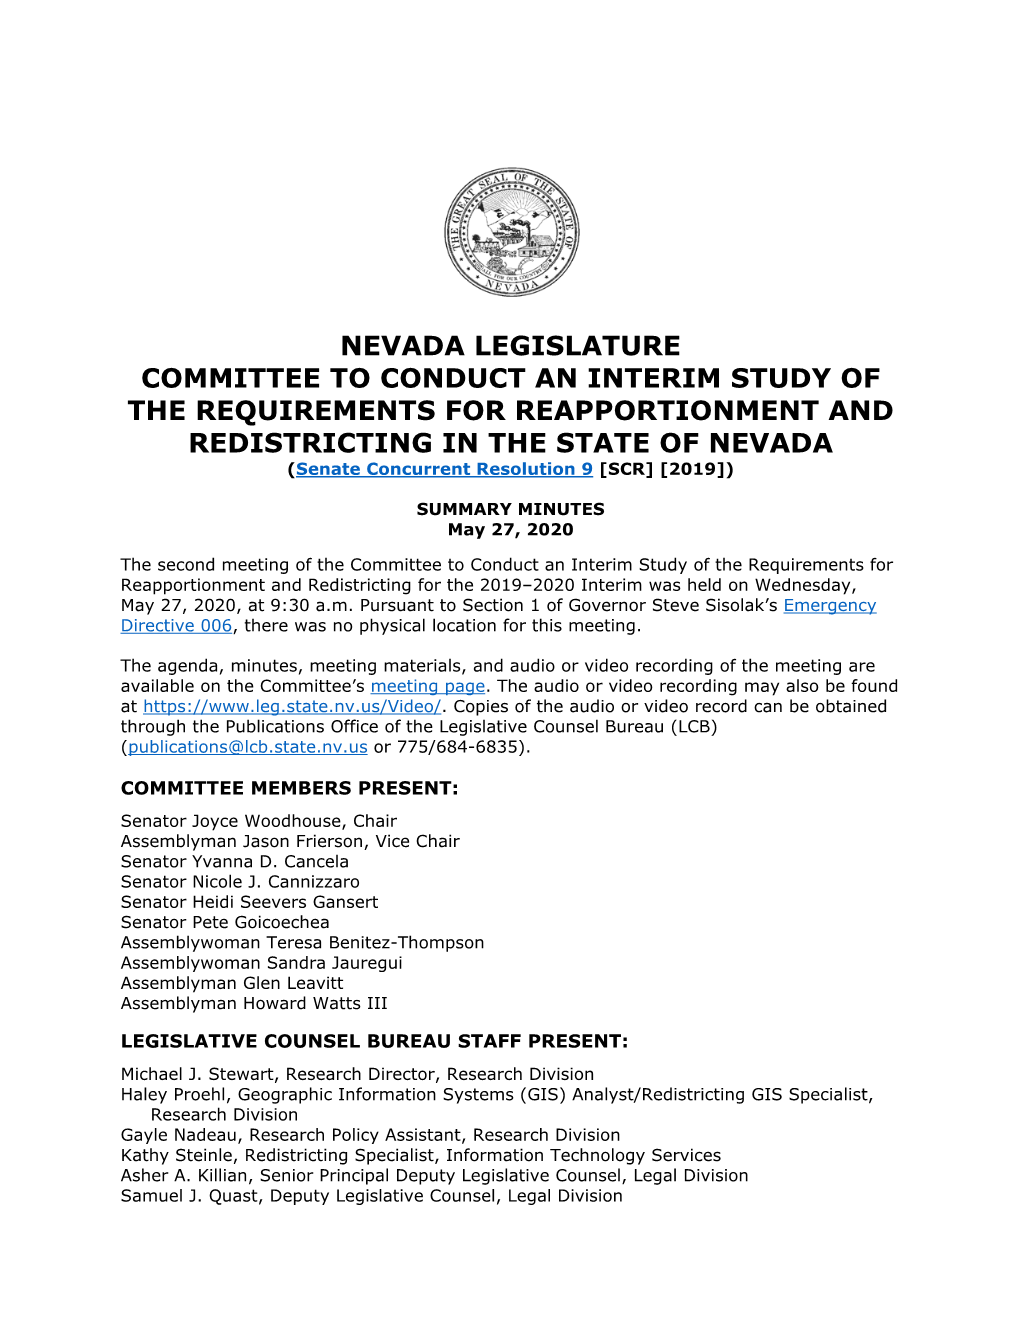 Nevada Legislature Committee to Conduct An